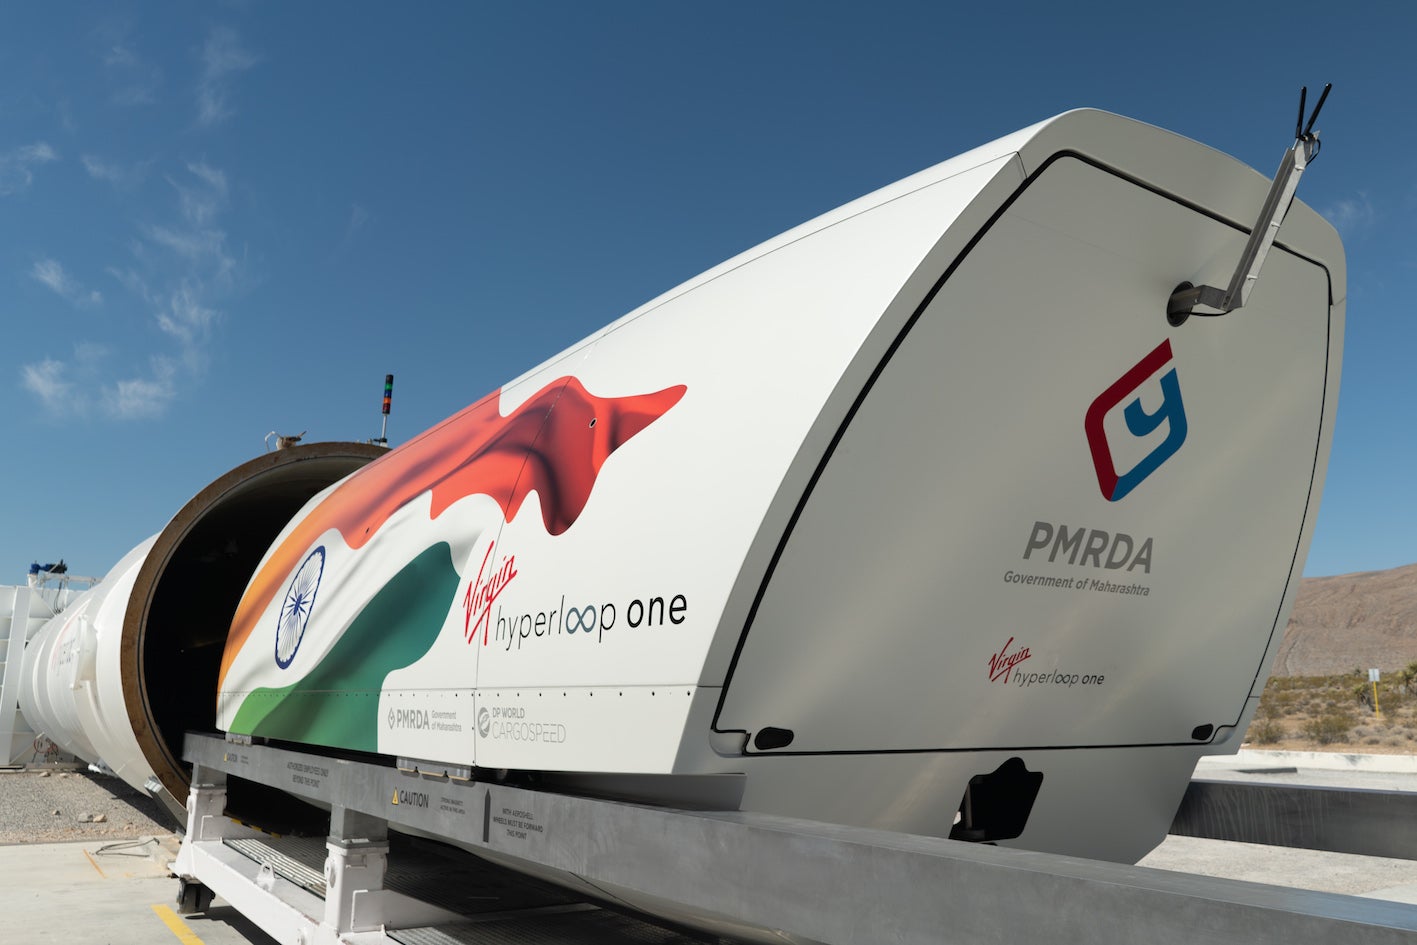 India Hyperloop project “on pause” due to coronavirus: Virgin Hyperloop One CEO